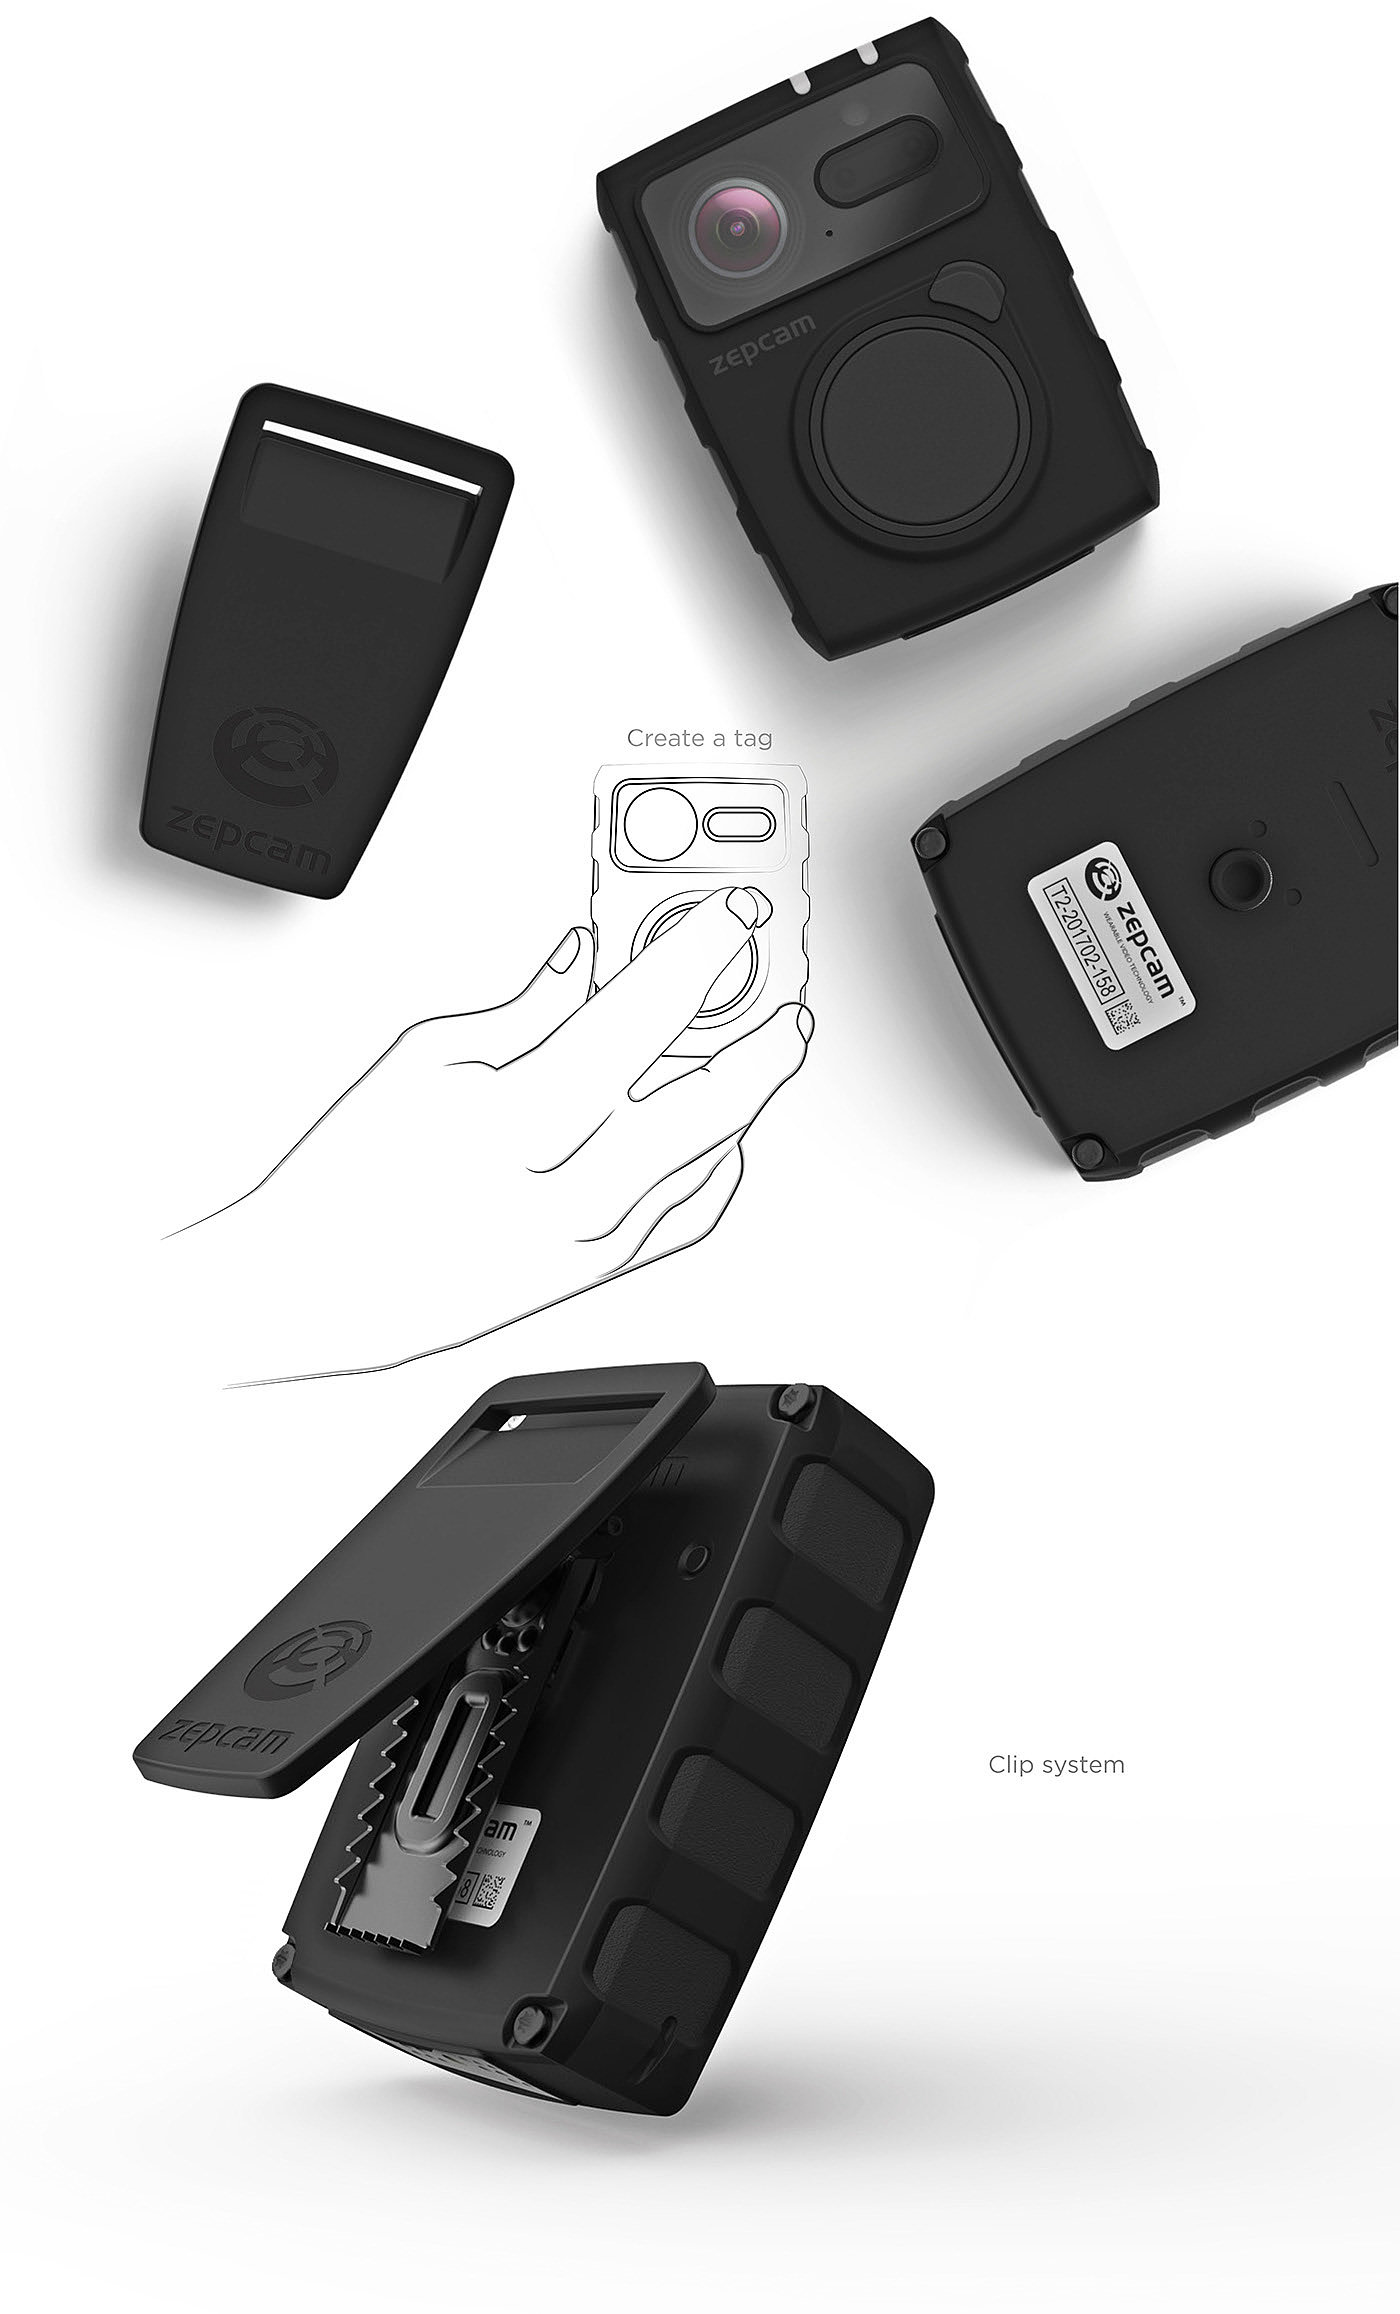 Zepcam T2，摄像机，黑色，便携，